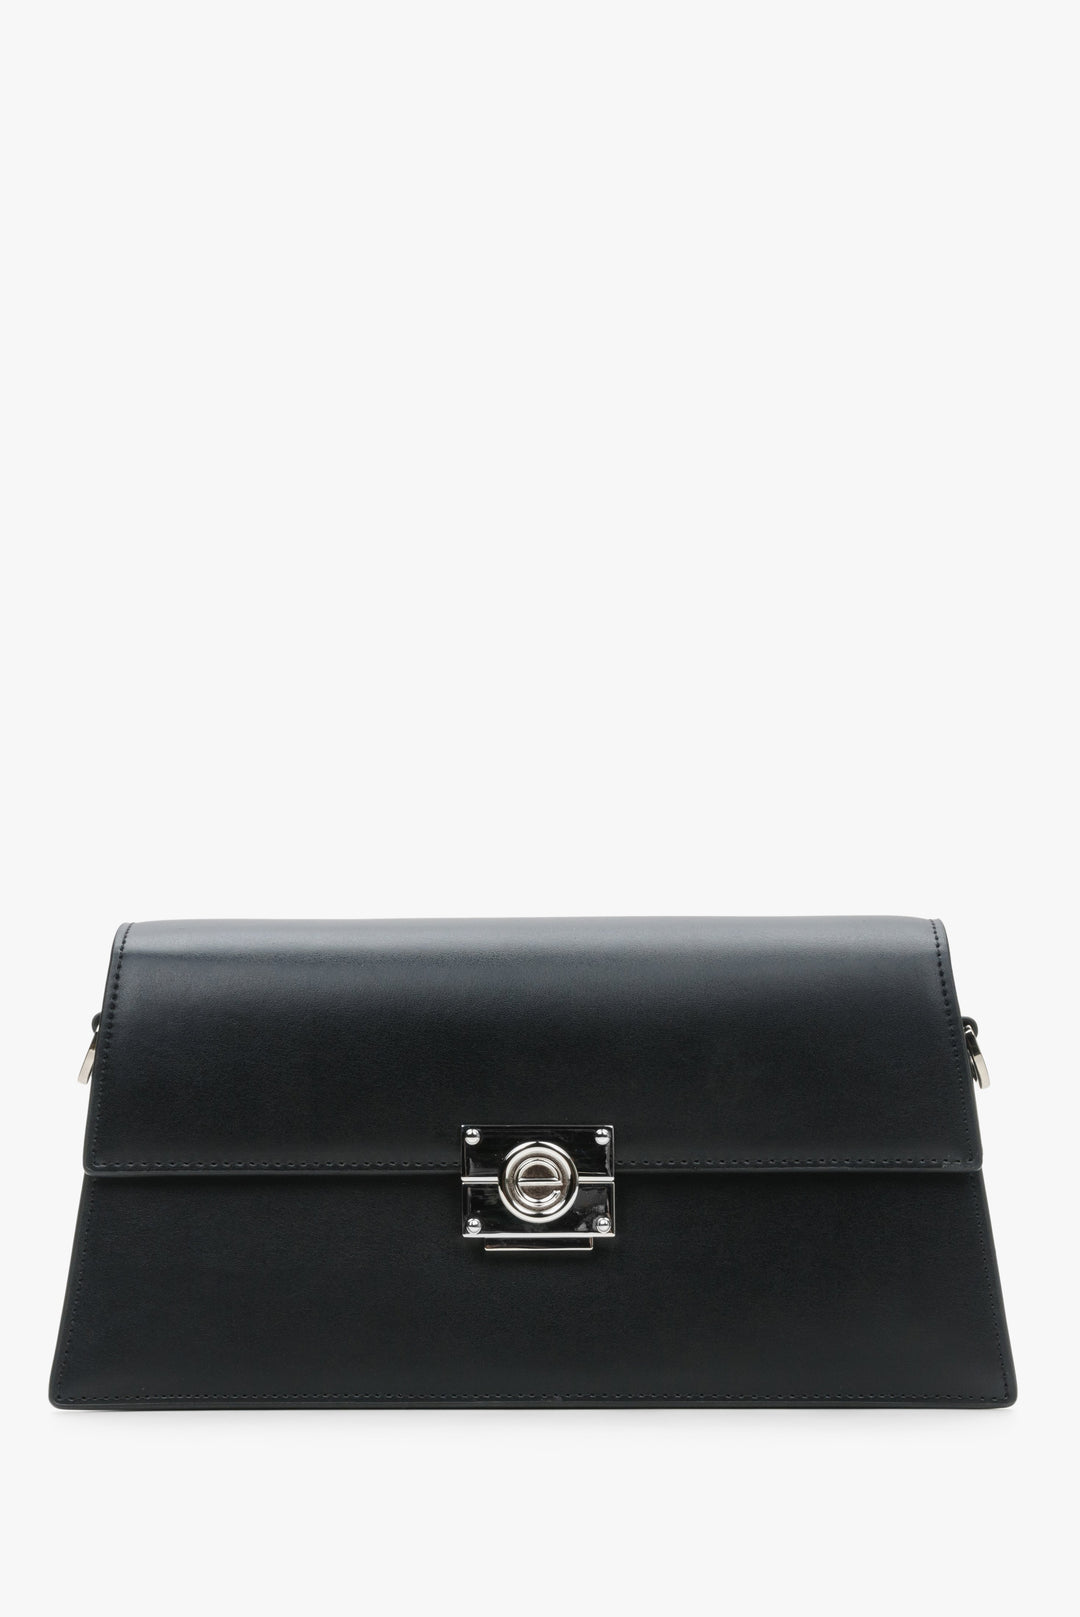 Women's black leather handbag by Estro.